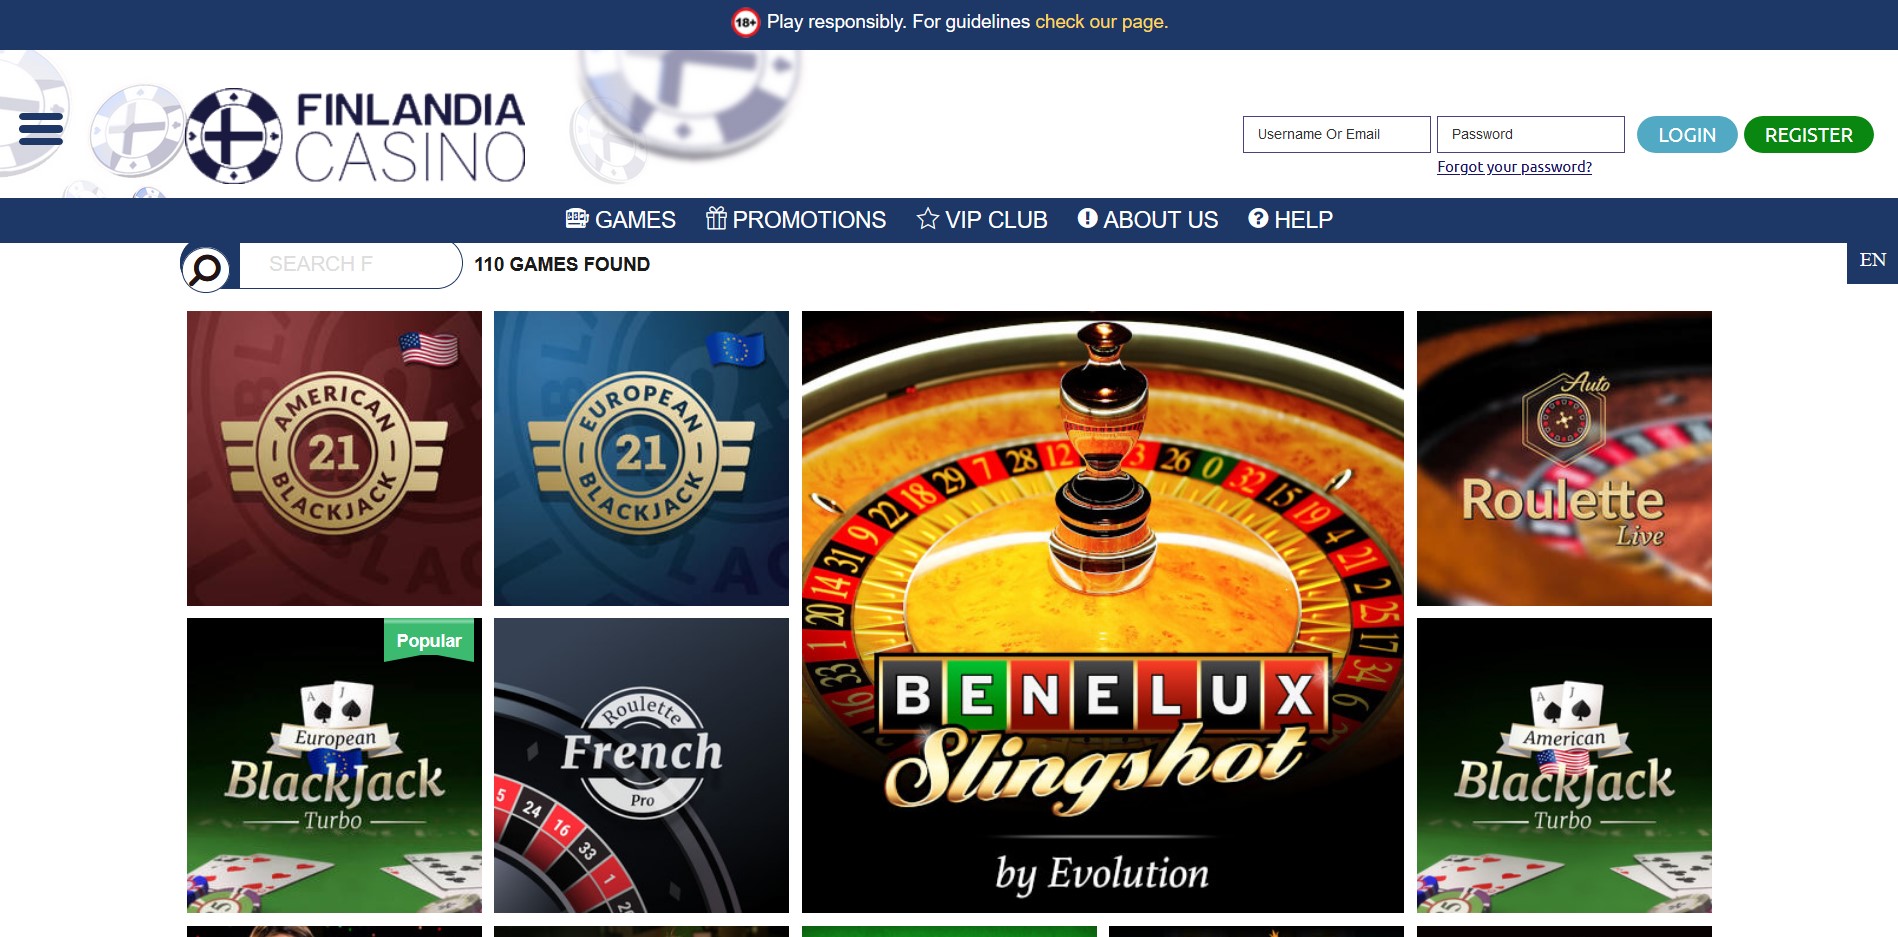 Finlandia Casino Live Dealer Games